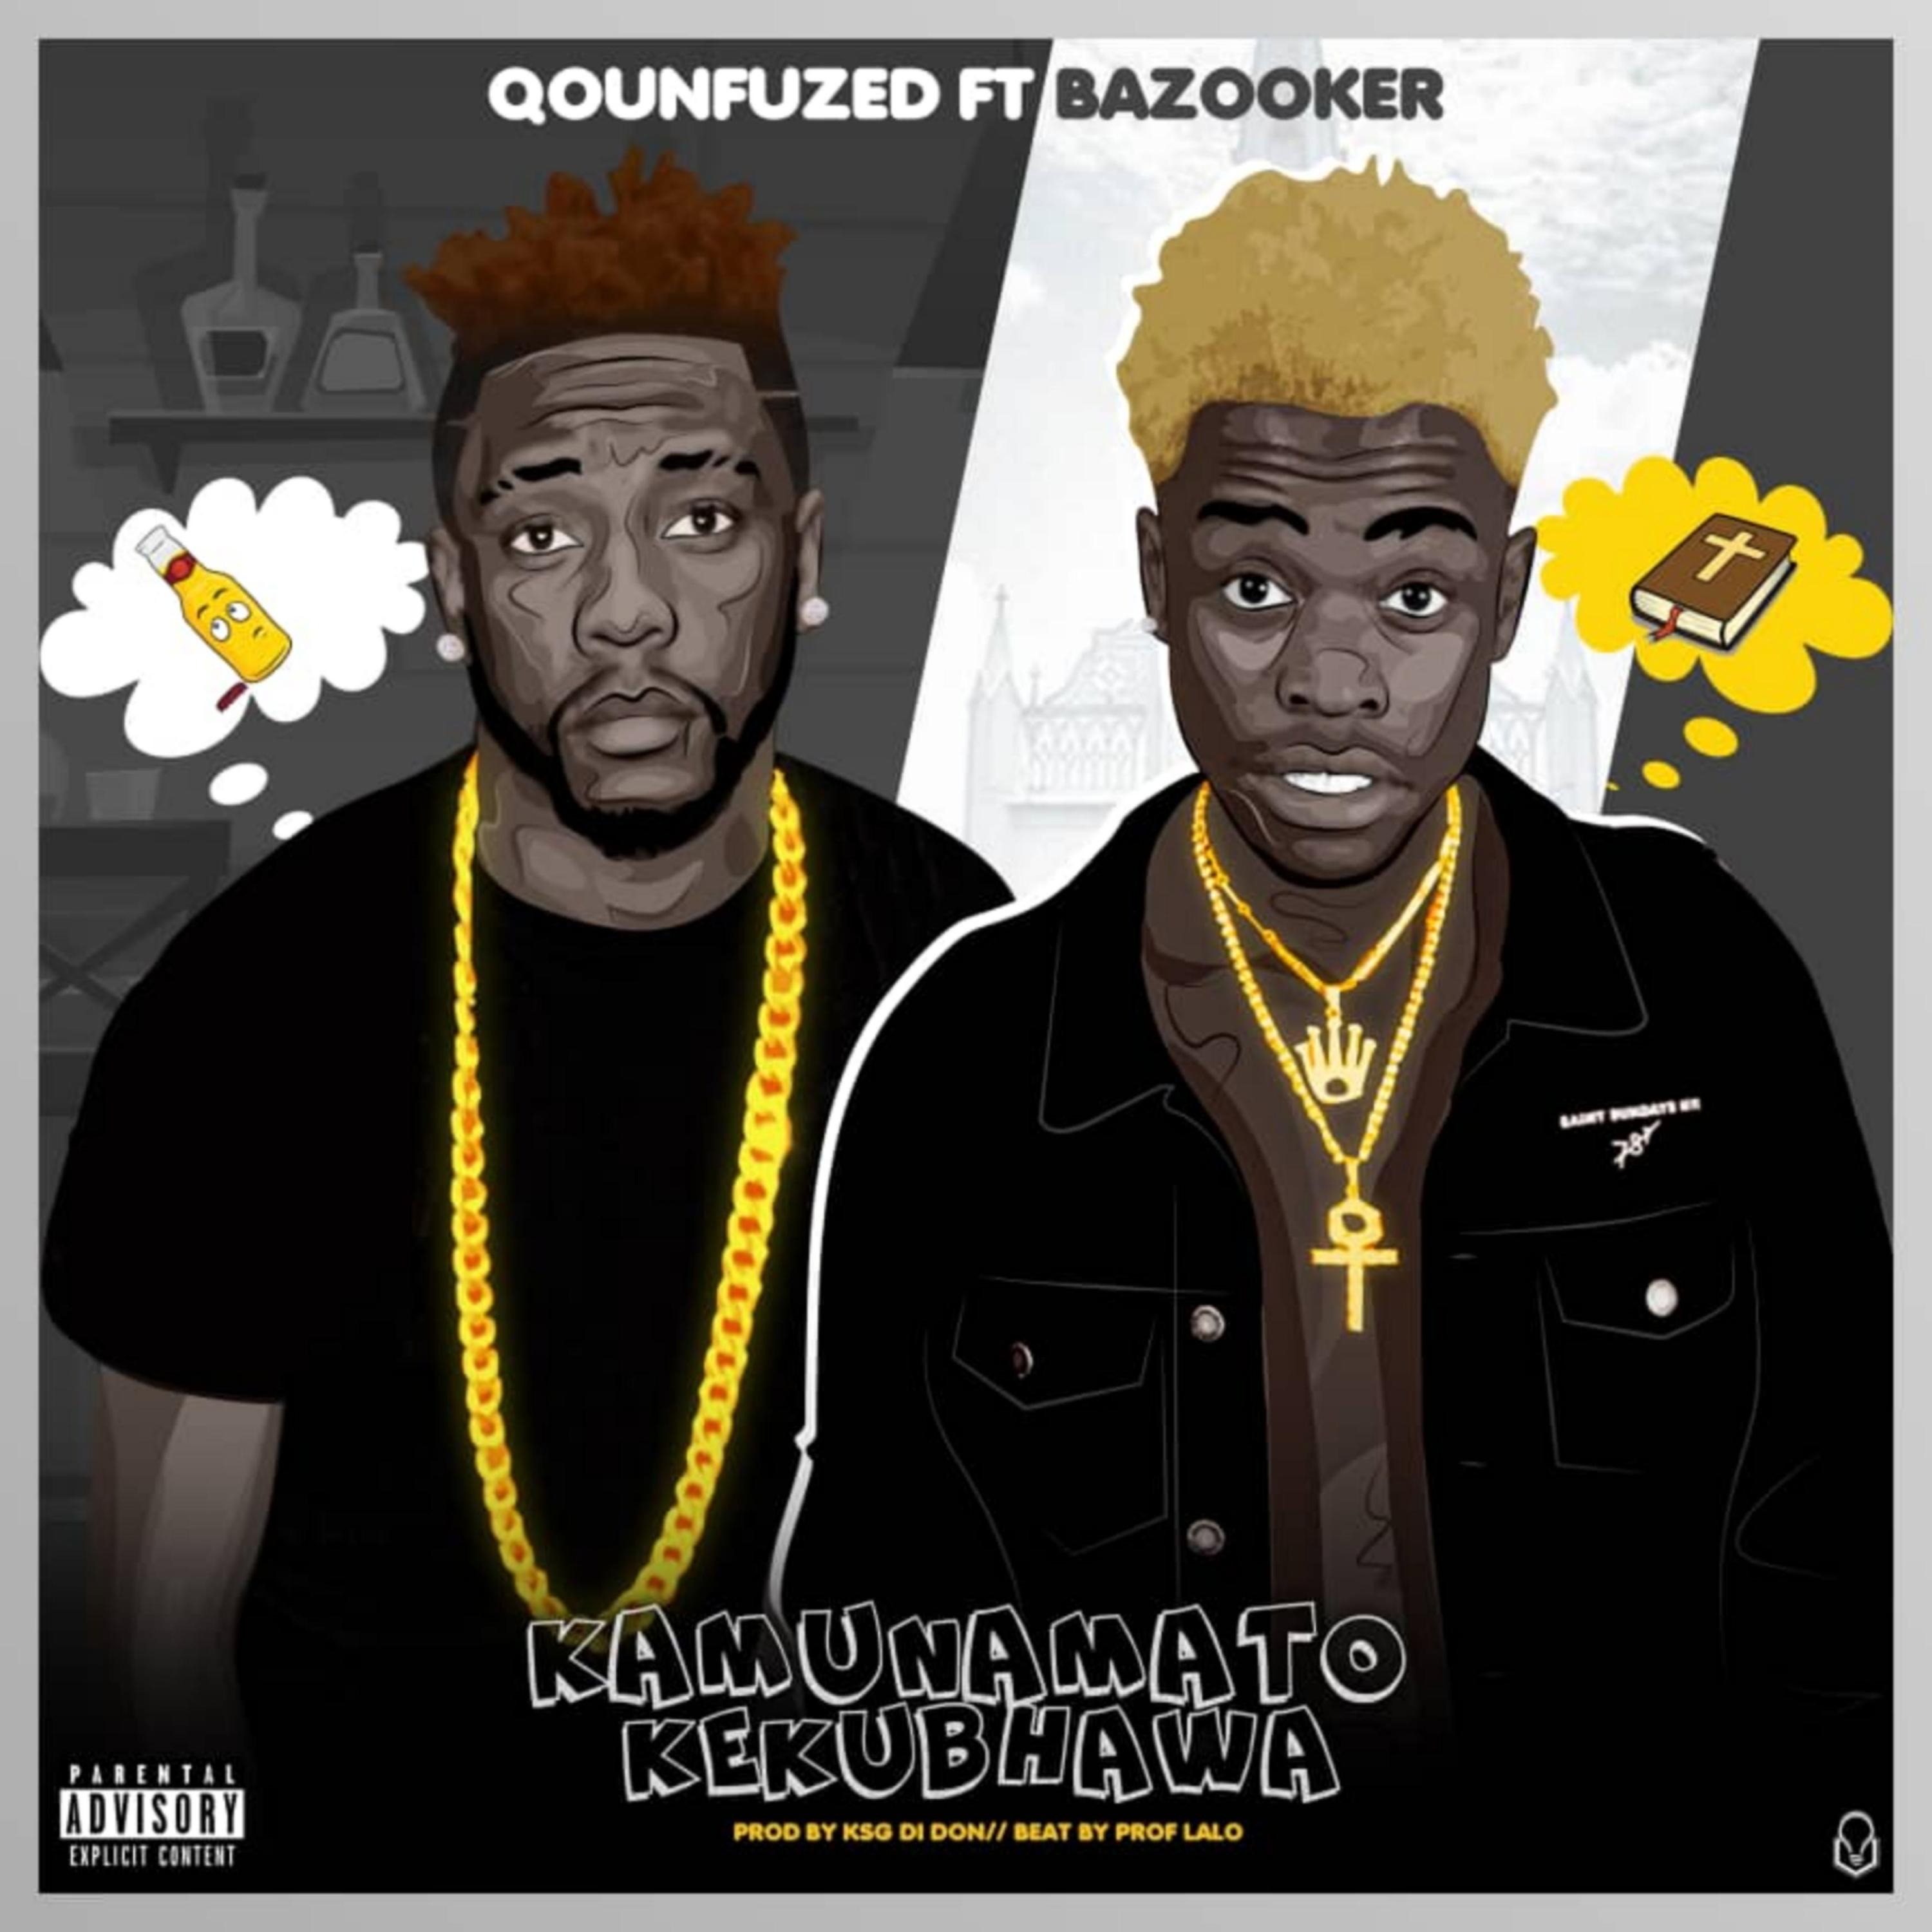 Qounfuzed - Kamunamato Kekubhawa (feat. Bazooker)